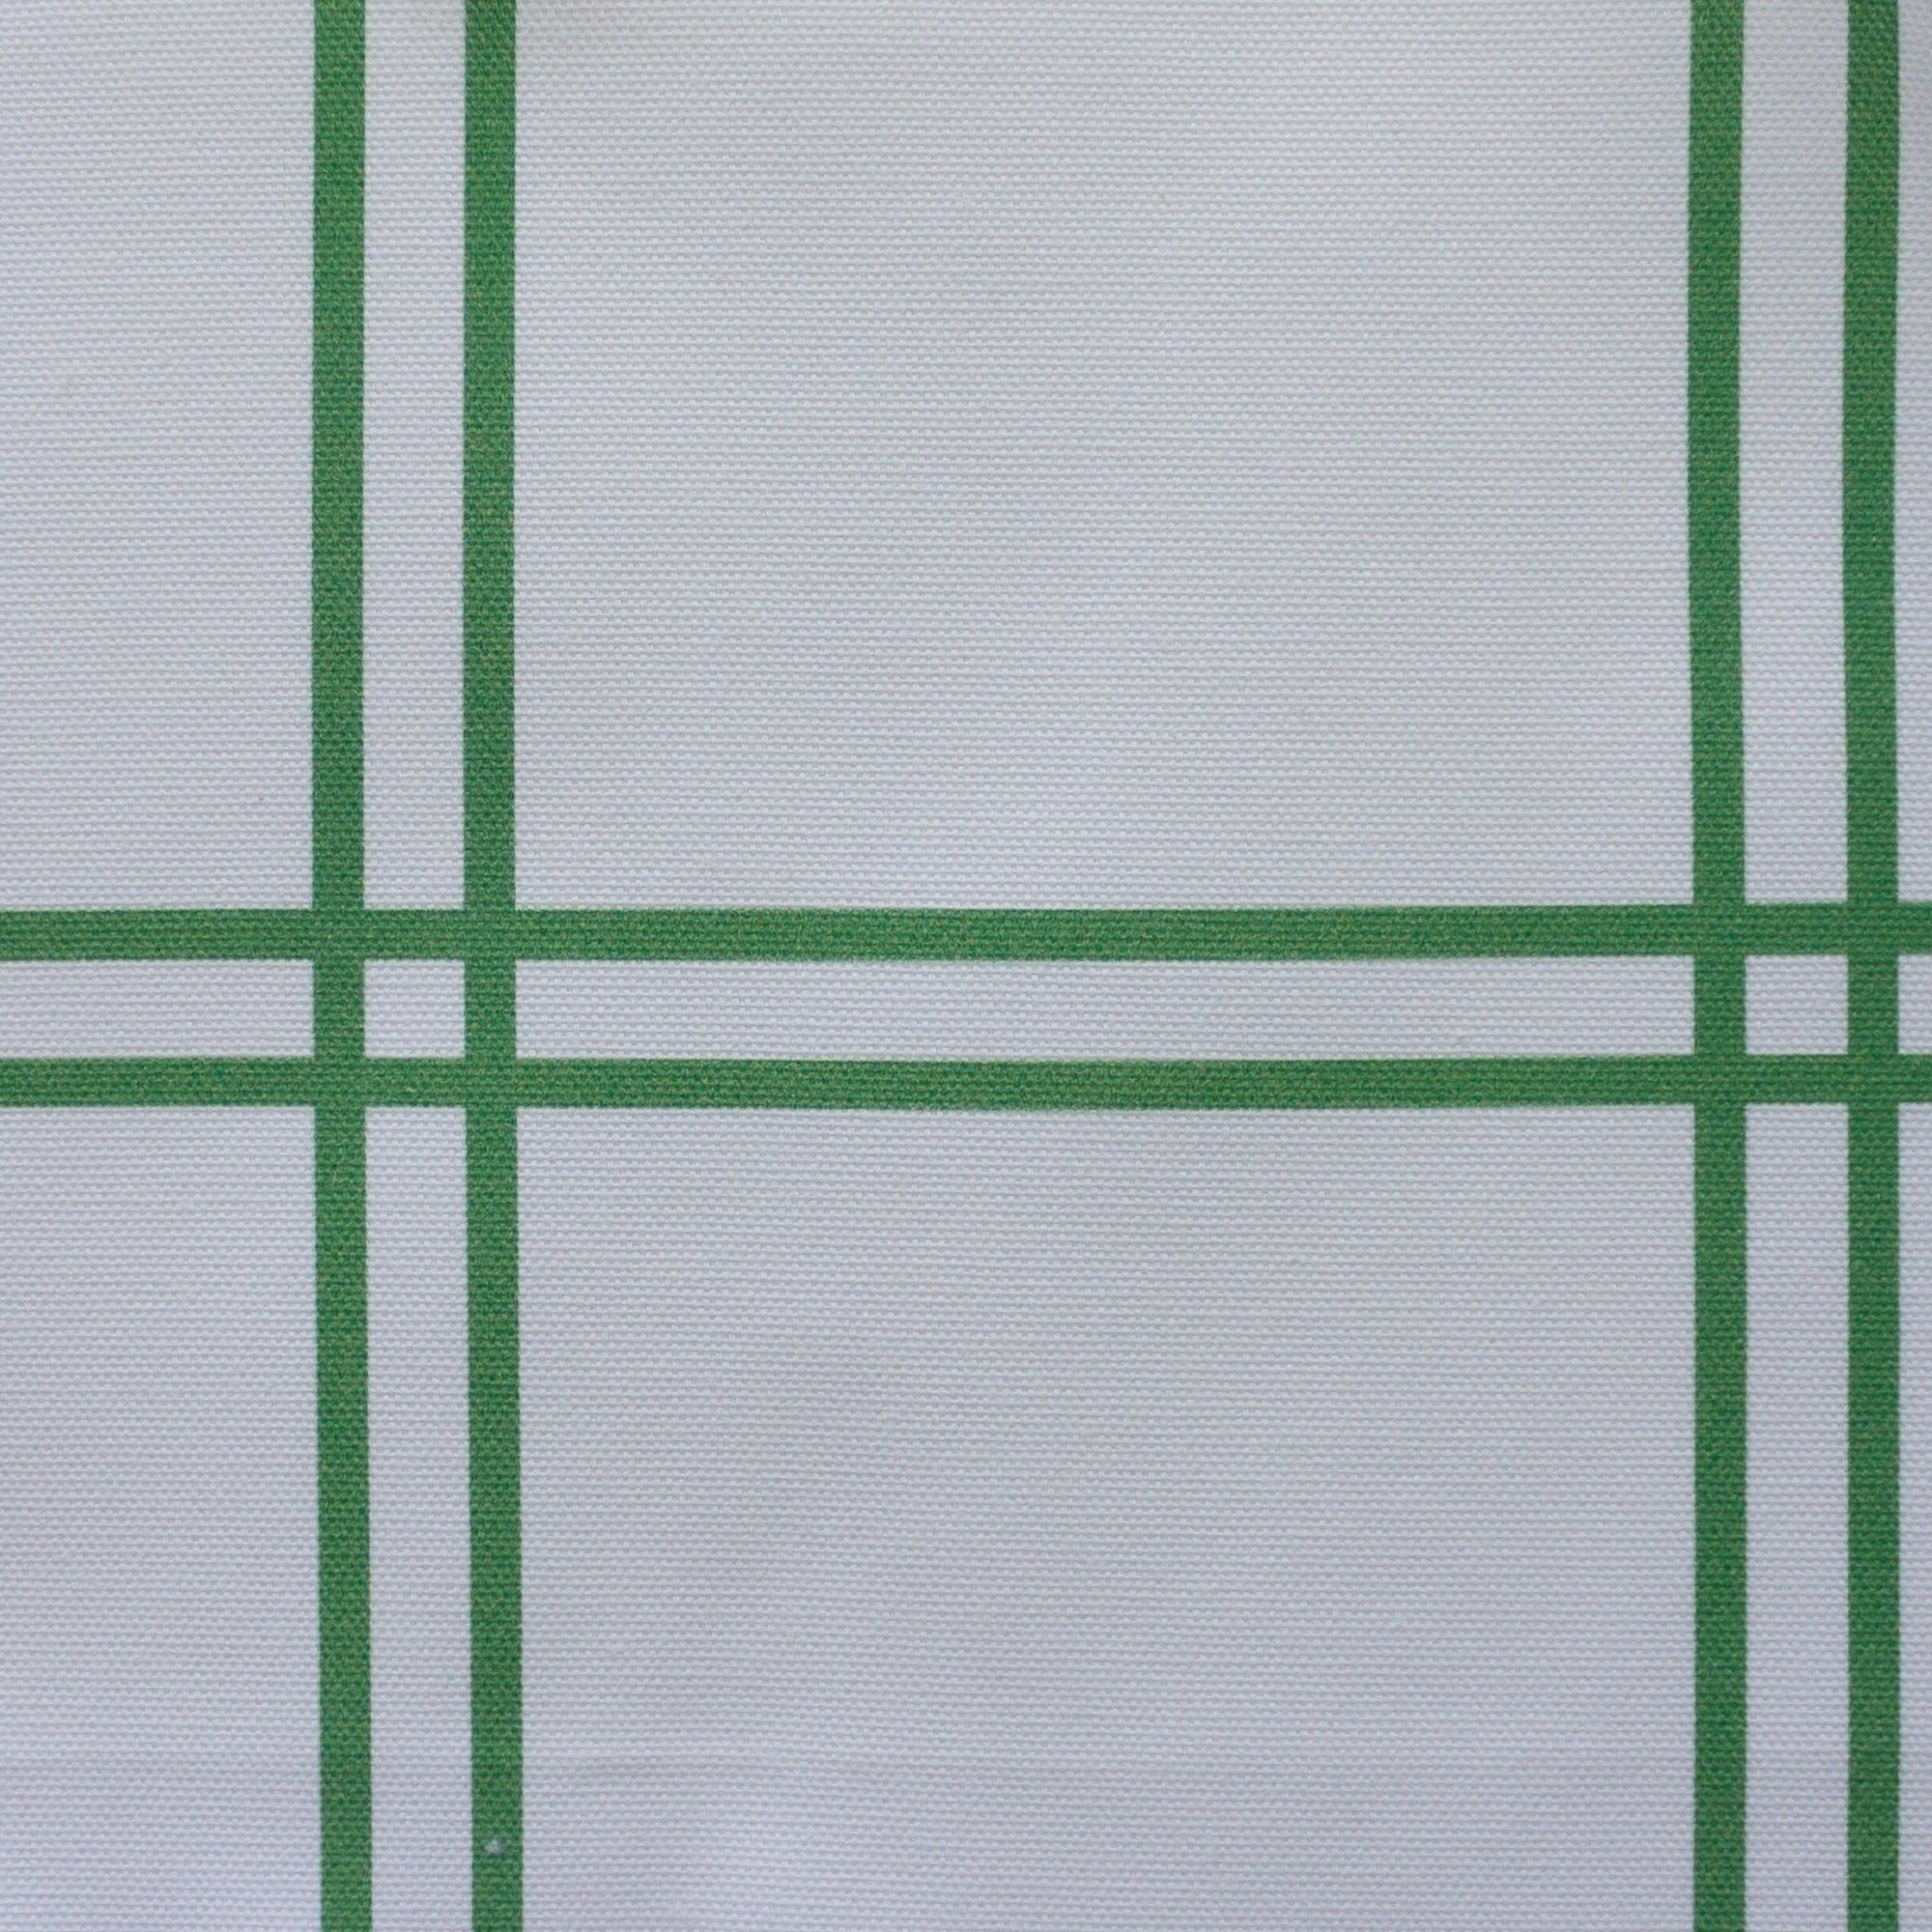 Double Window Pane Check Fabric - Emerald - Hydrangea Lane Home